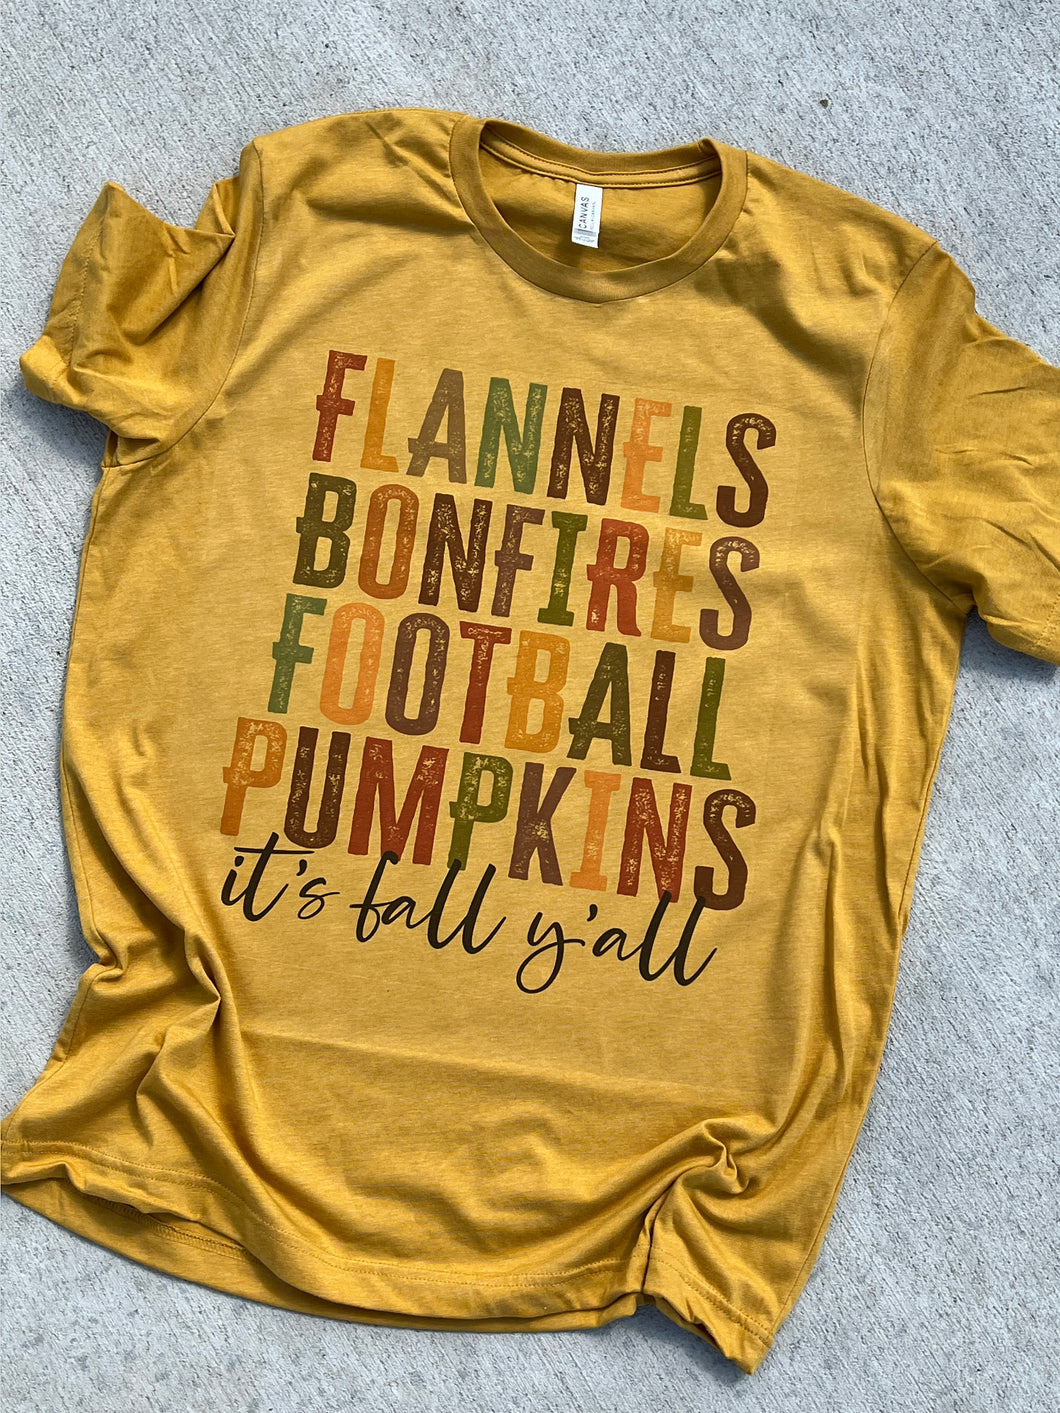 Flannels Bonefires Football Pumpkins it’s fall y’all graphic shirt on heather mustard yellow - Mavictoria Designs Hot Press Express